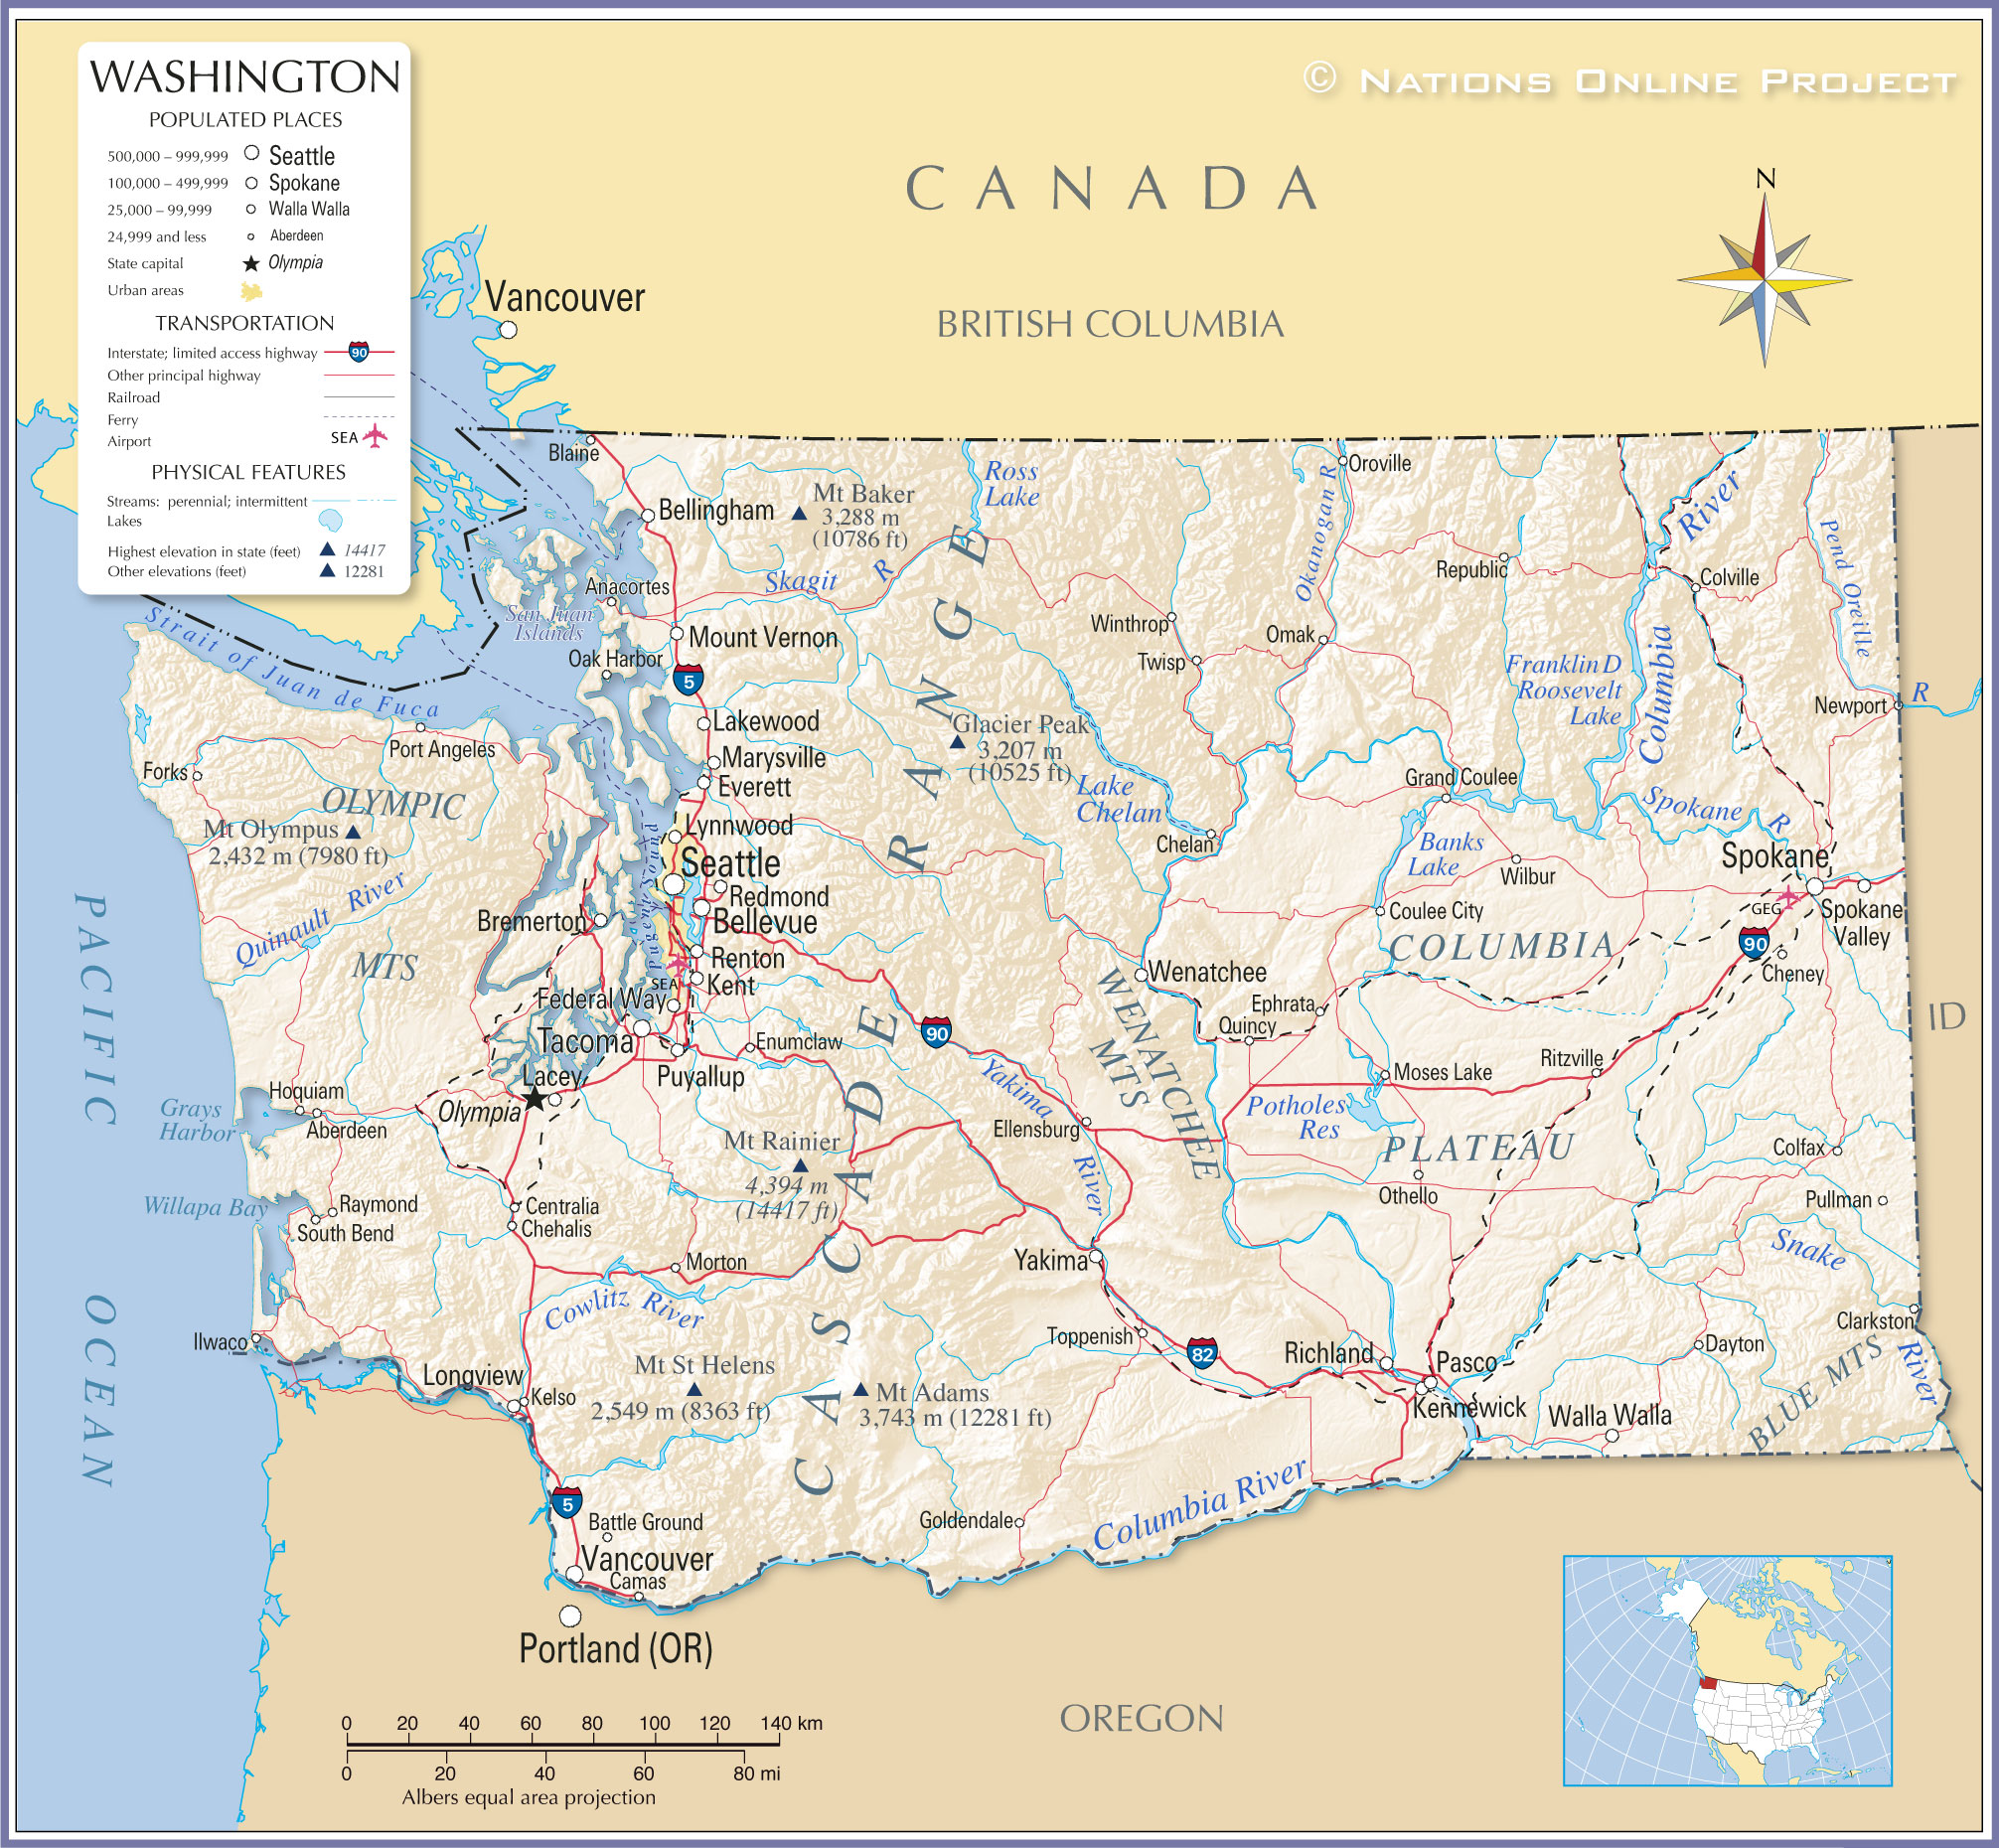 Reference Map of Washington State